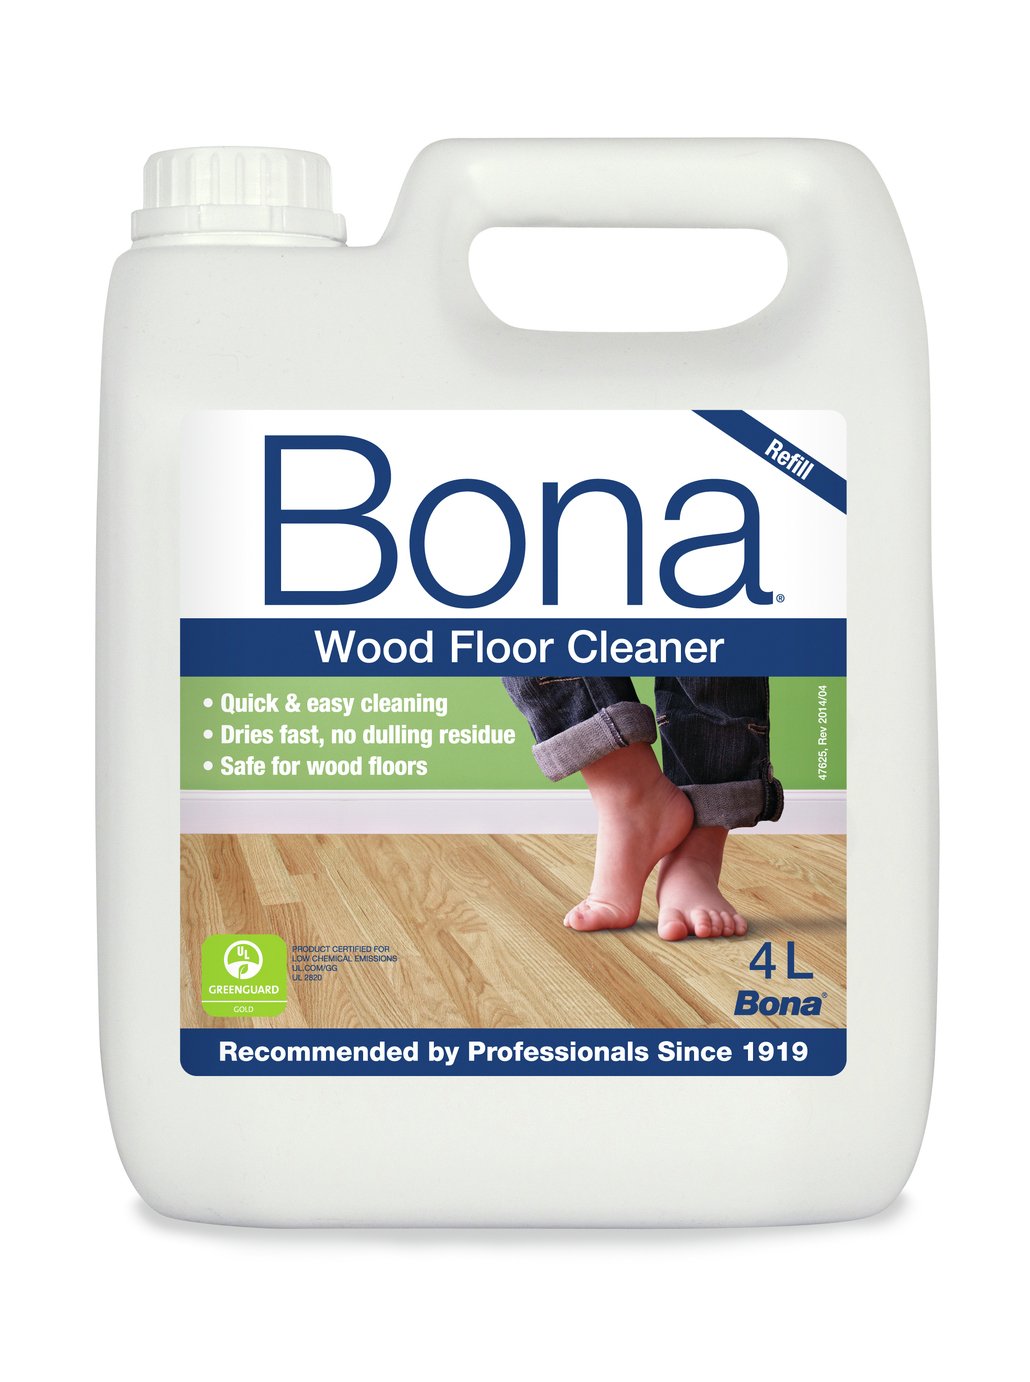 Bona 4L Wood Floor Cleaning Solution Refill